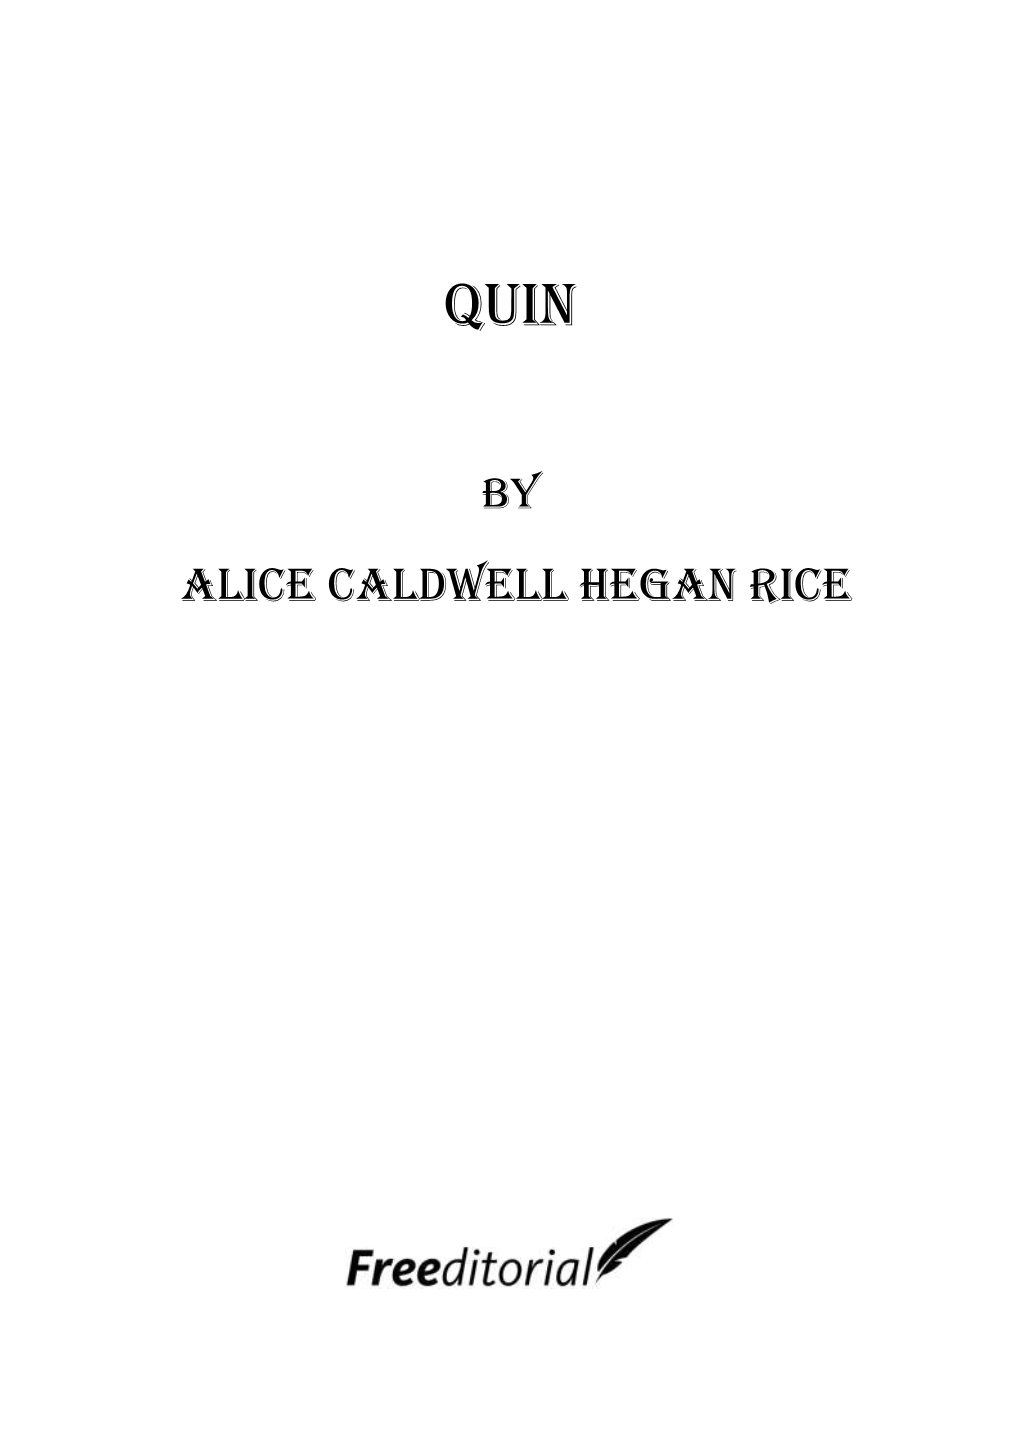 Alice Caldwell Hegan Rice